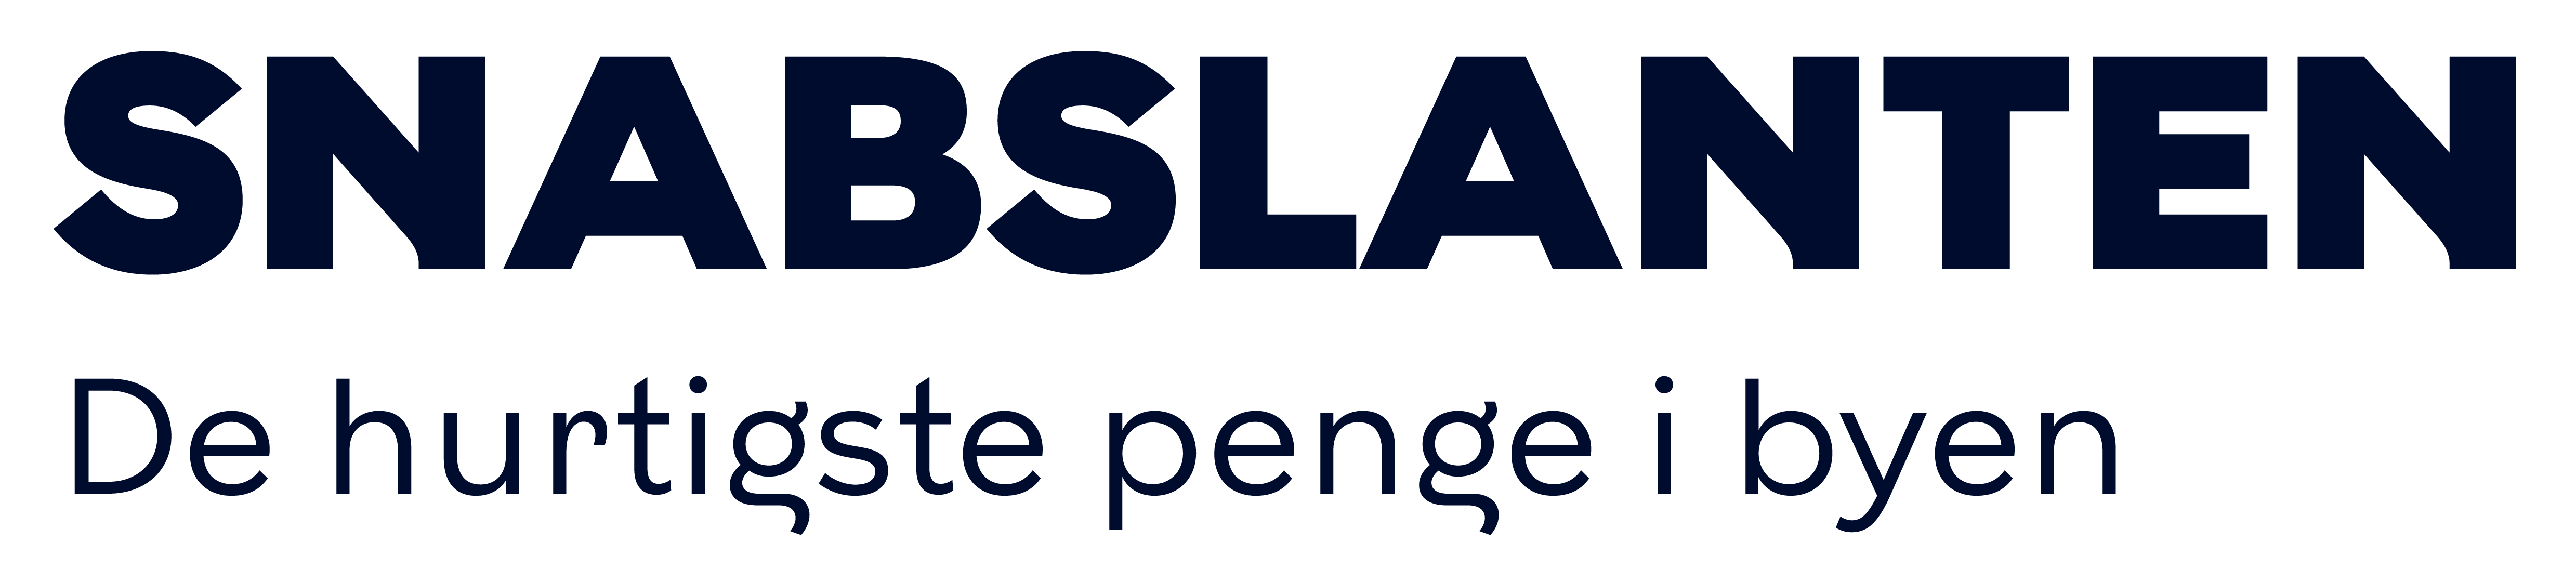 snabslanten logo